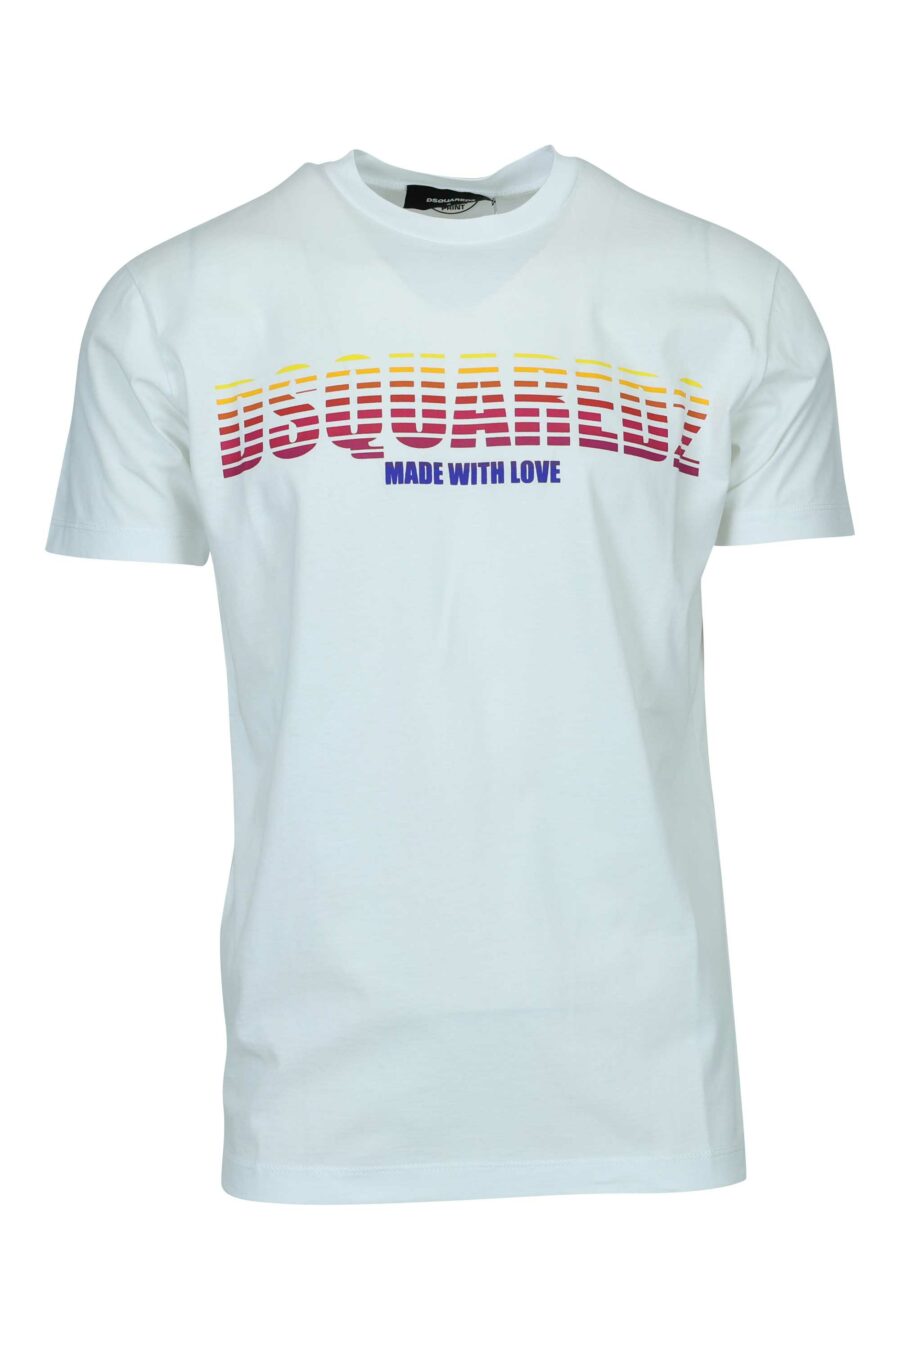 White T-shirt with multicoloured retro maxilogo - 8054148447434 2